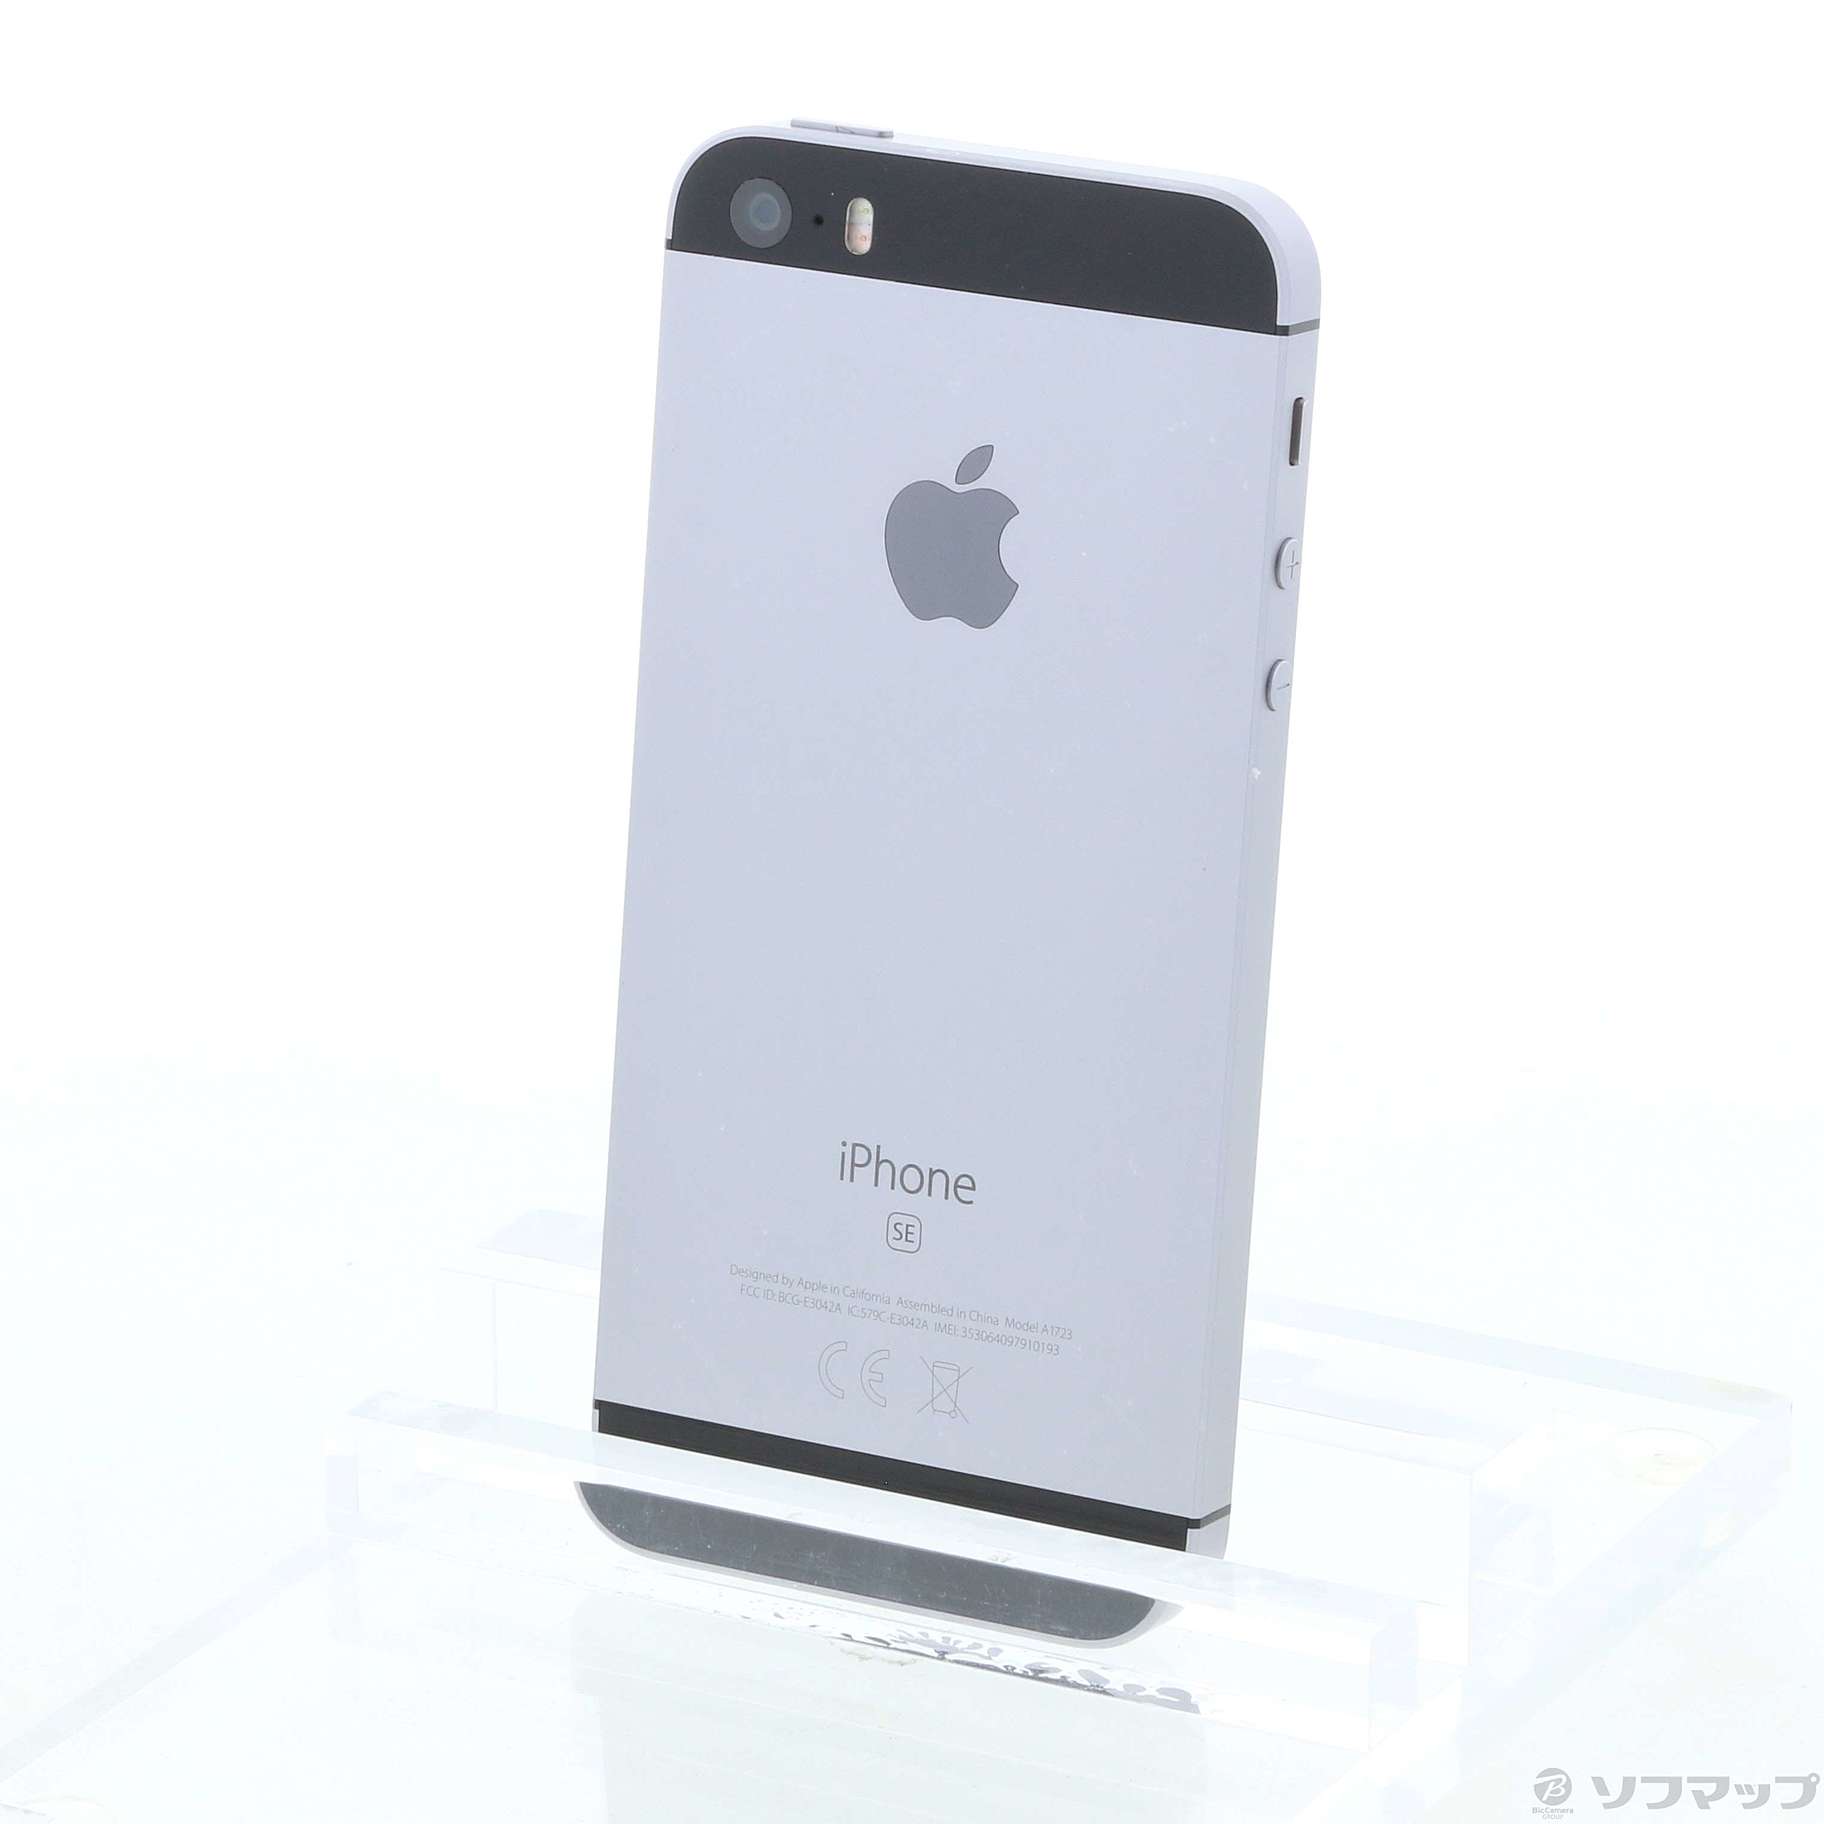 iPhone SE スペースグレイ 128G - スマートフォン本体